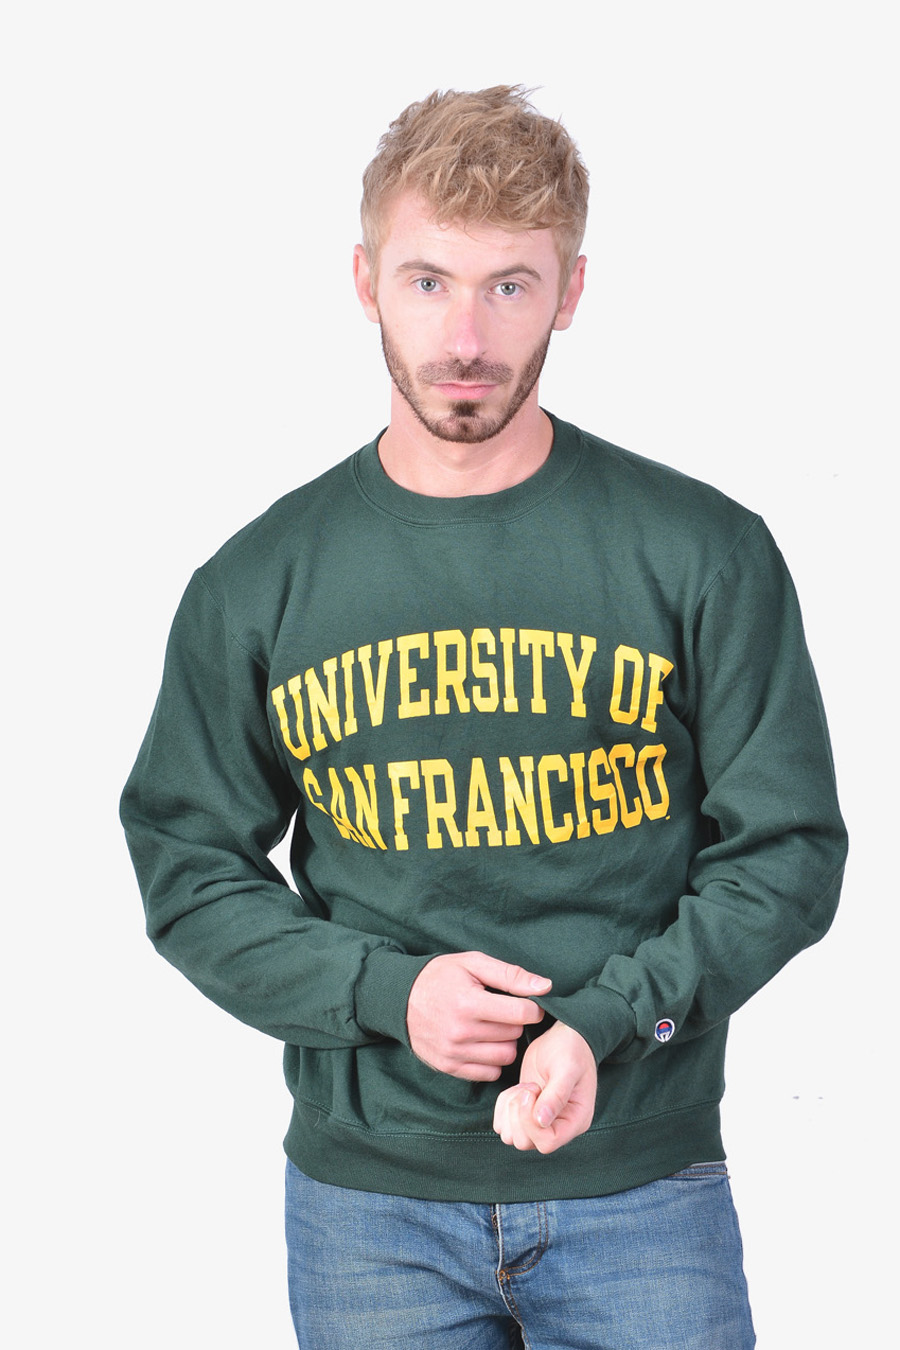 Vintage University Of San Francisco sweatshirt